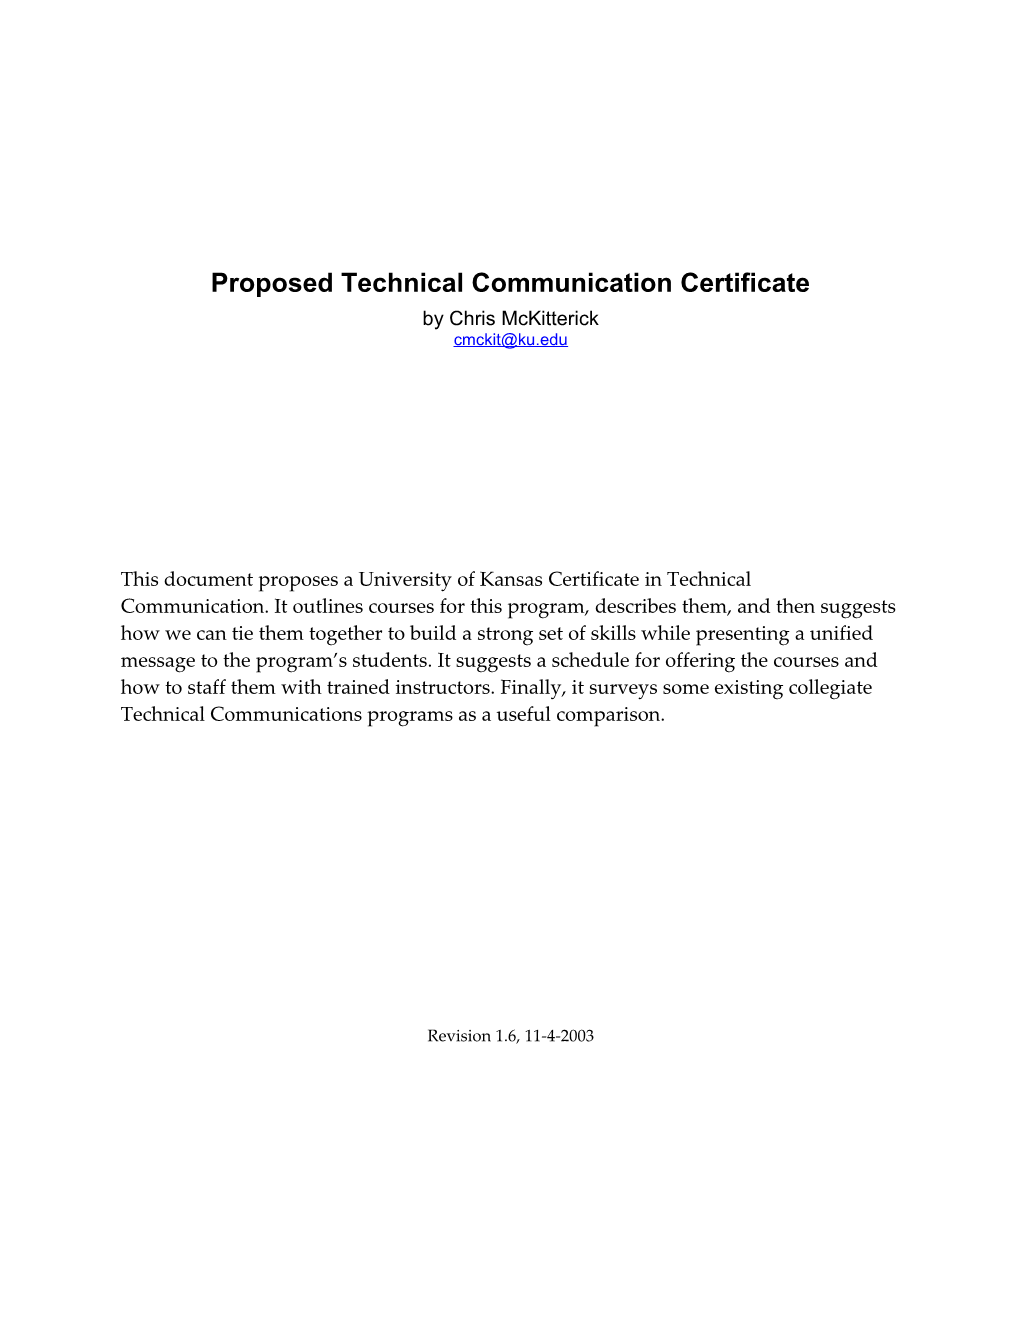 Technical Communication Certificate Proposal